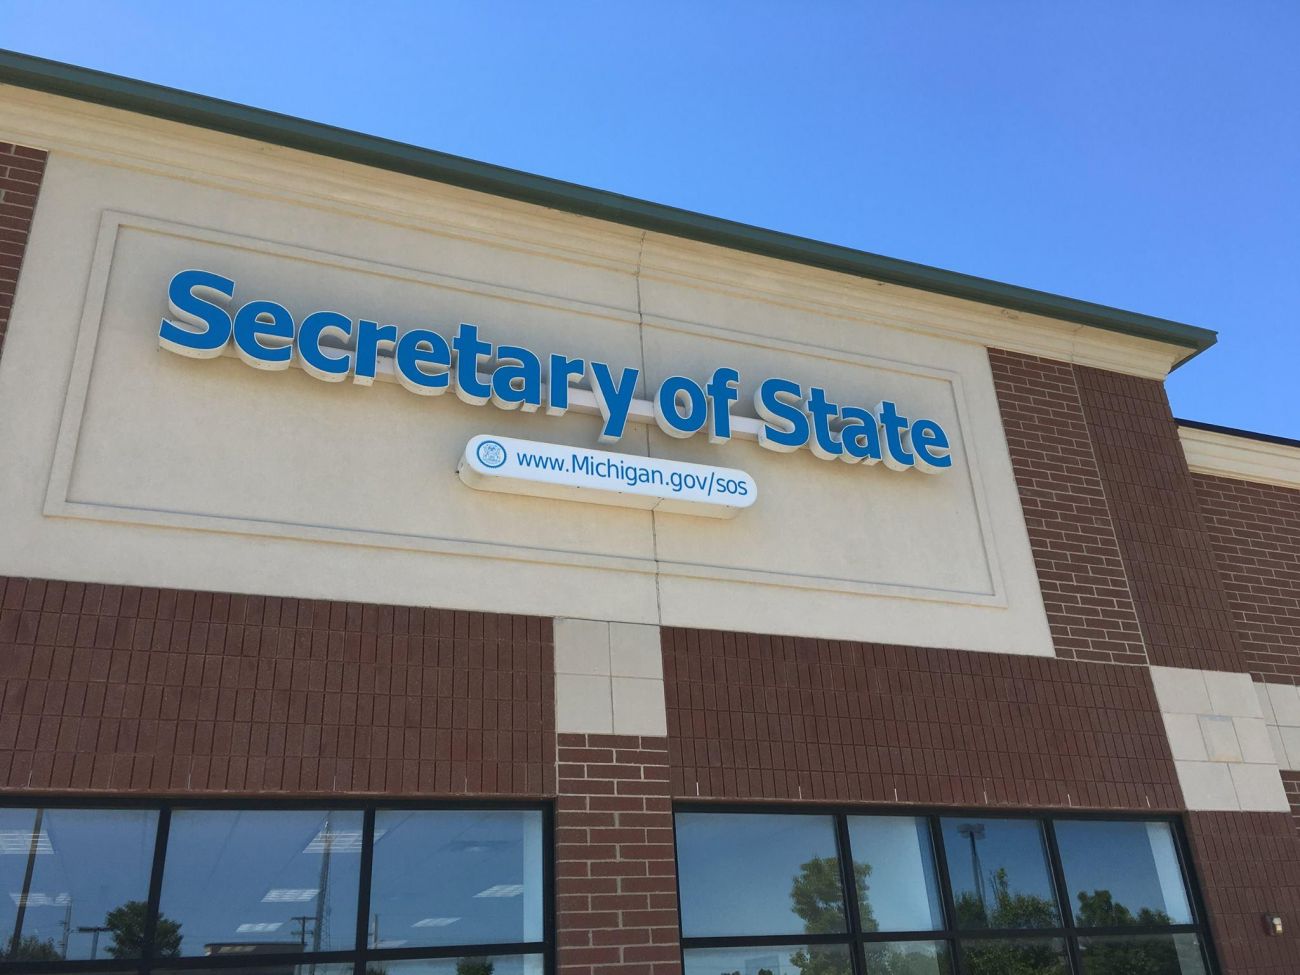  Secretary of State office